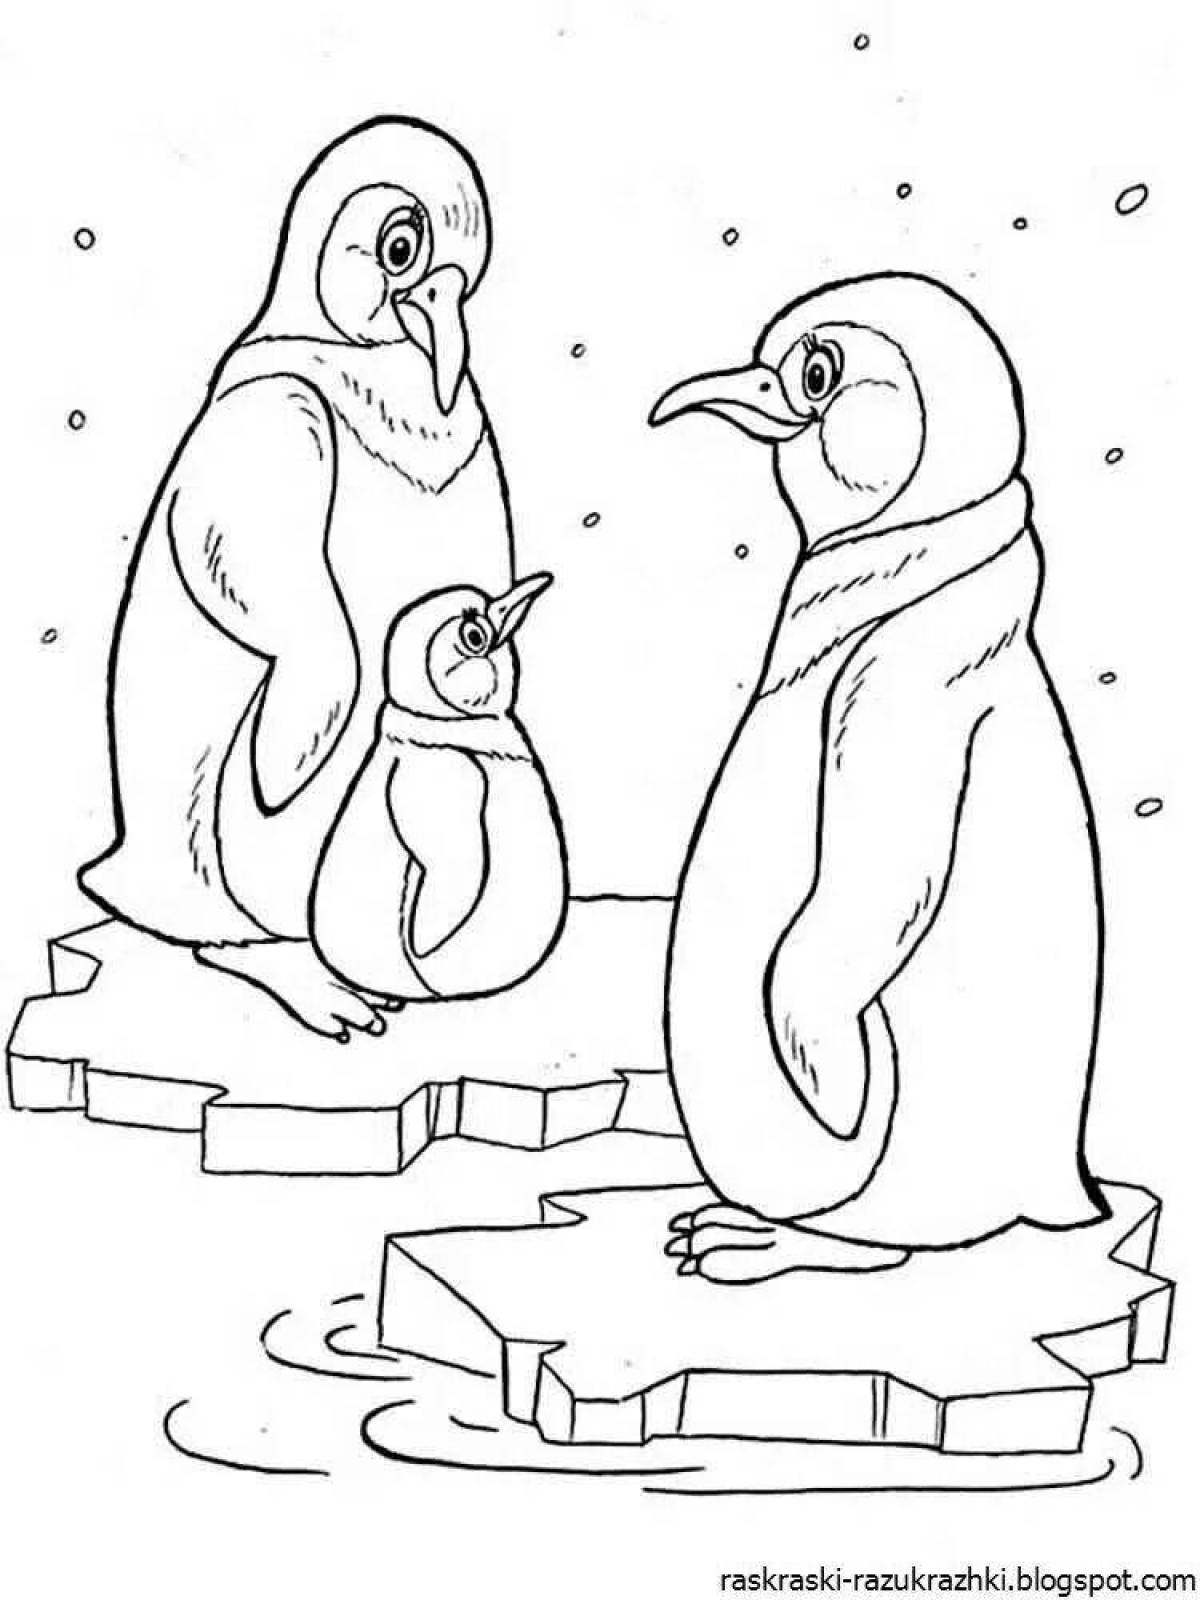 Coloring penguins for kids